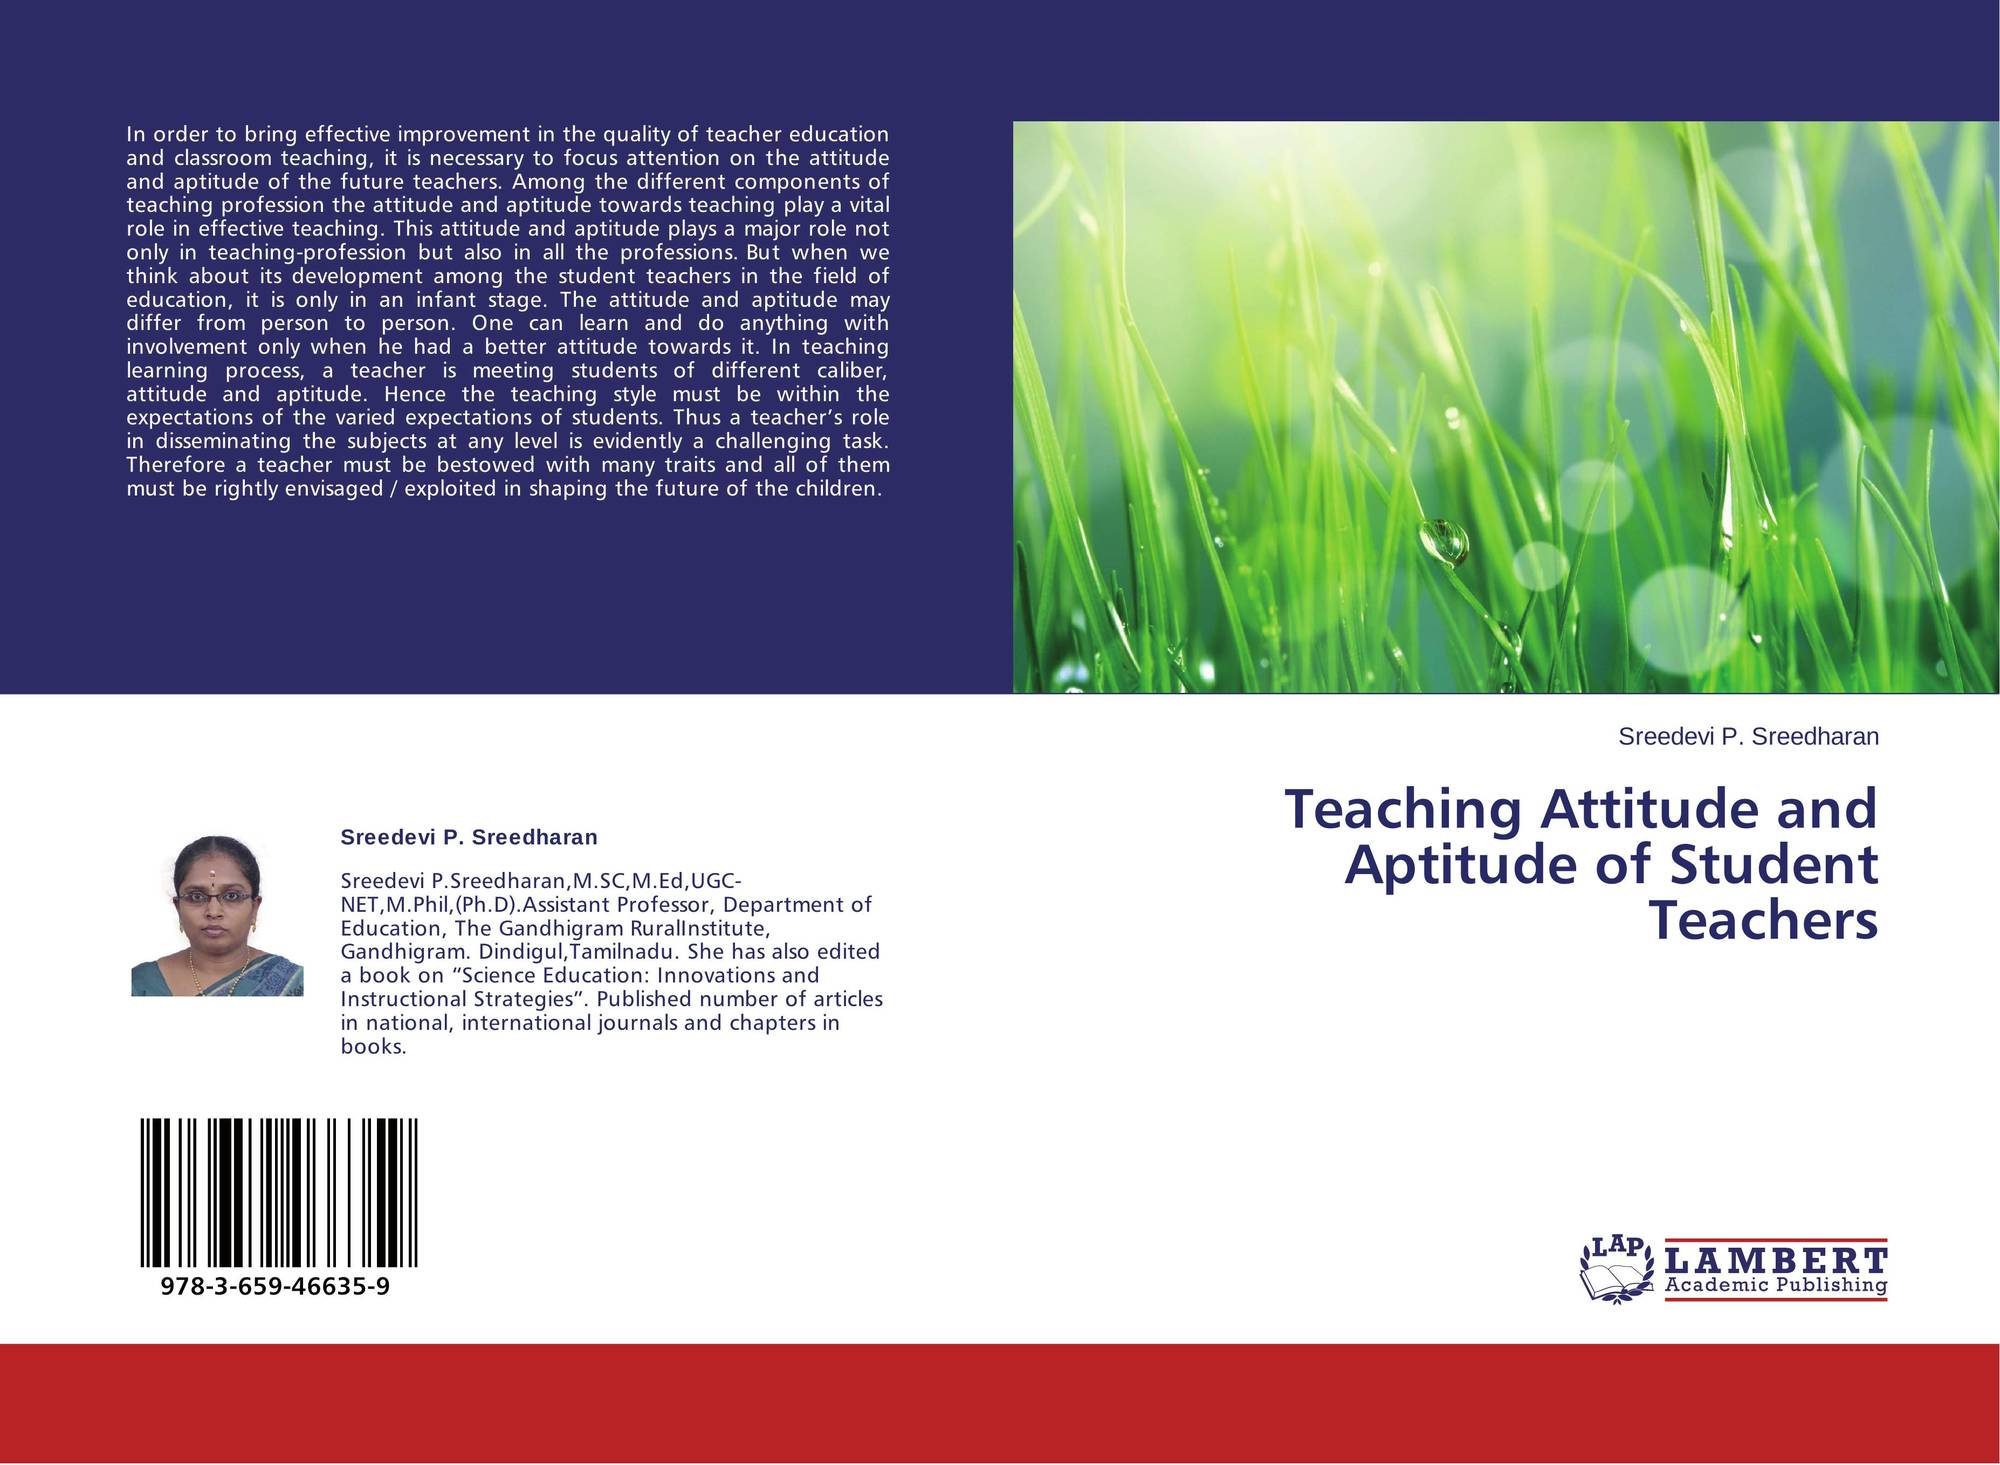 teaching-attitude-and-aptitude-of-student-teachers-978-3-659-46635-9-3659466352-9783659466359